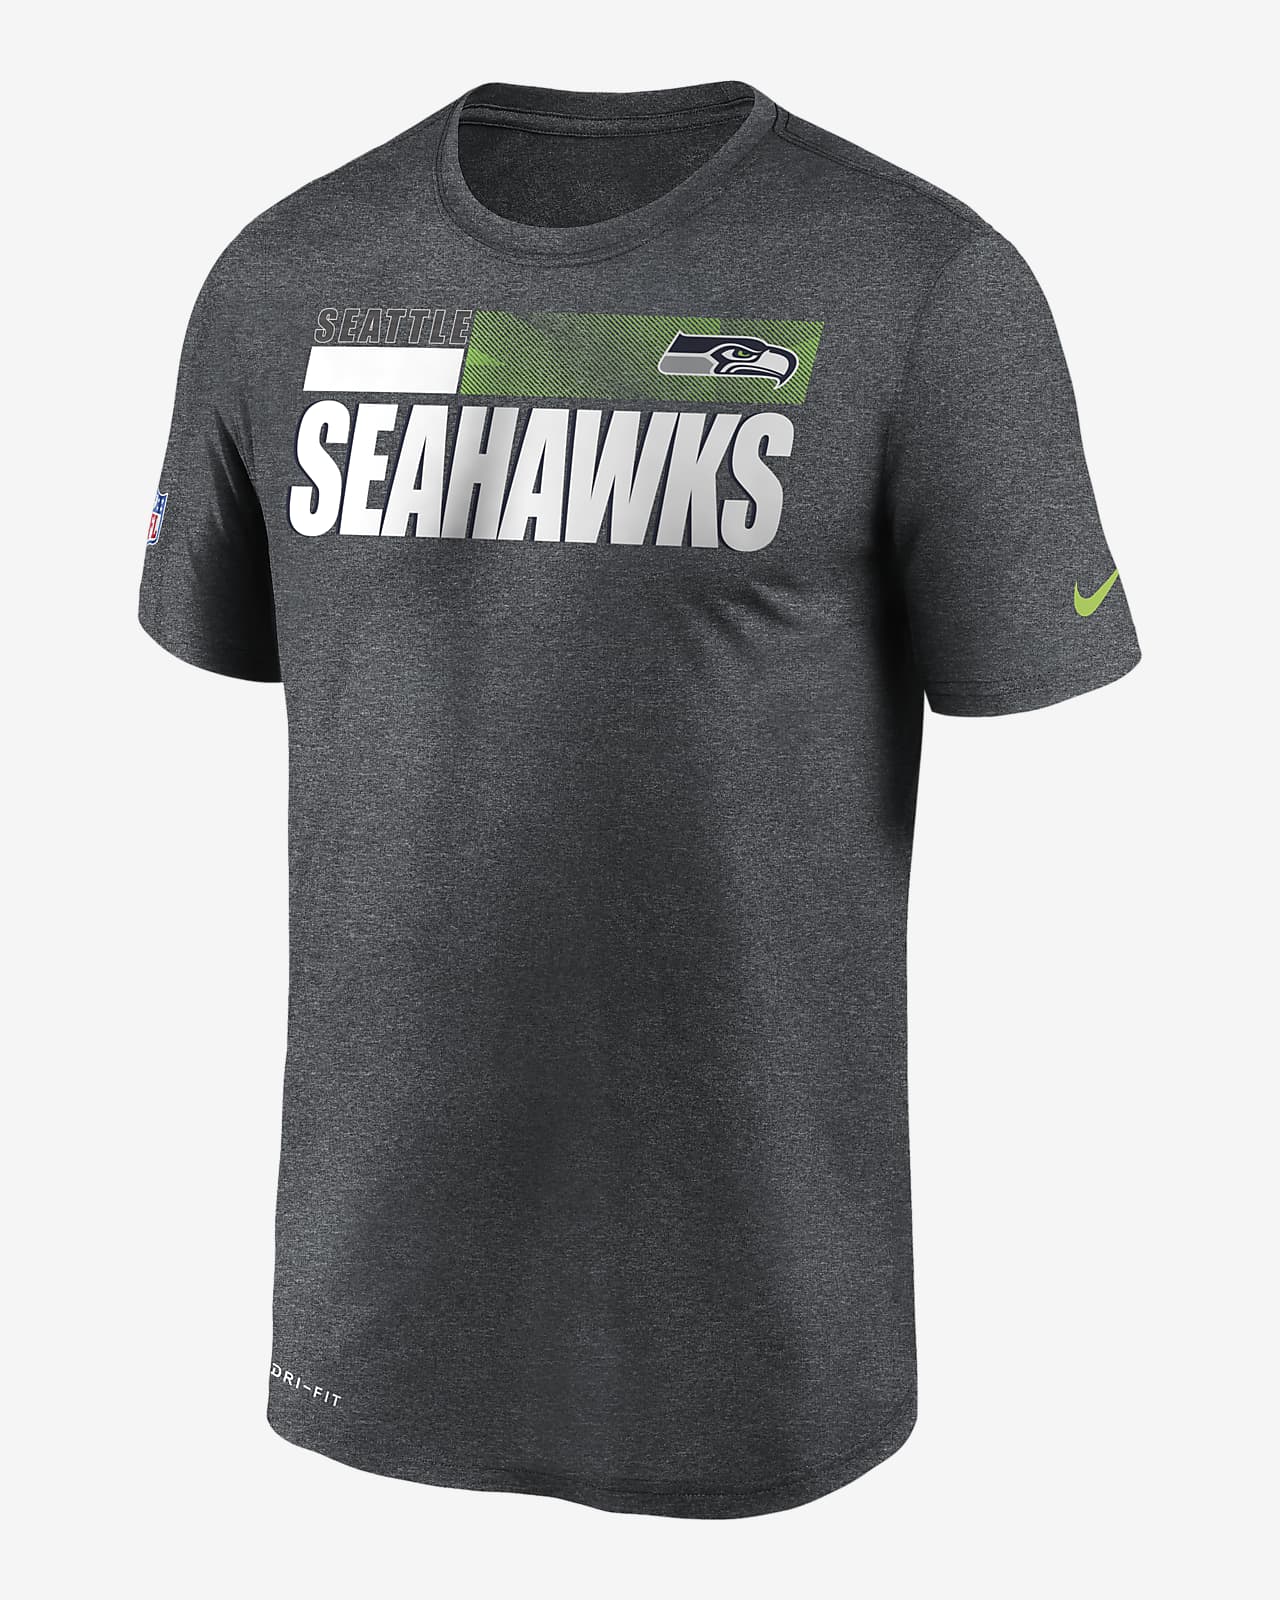 Nike Legend Sideline (NFL Seahawks) Men's T-Shirt